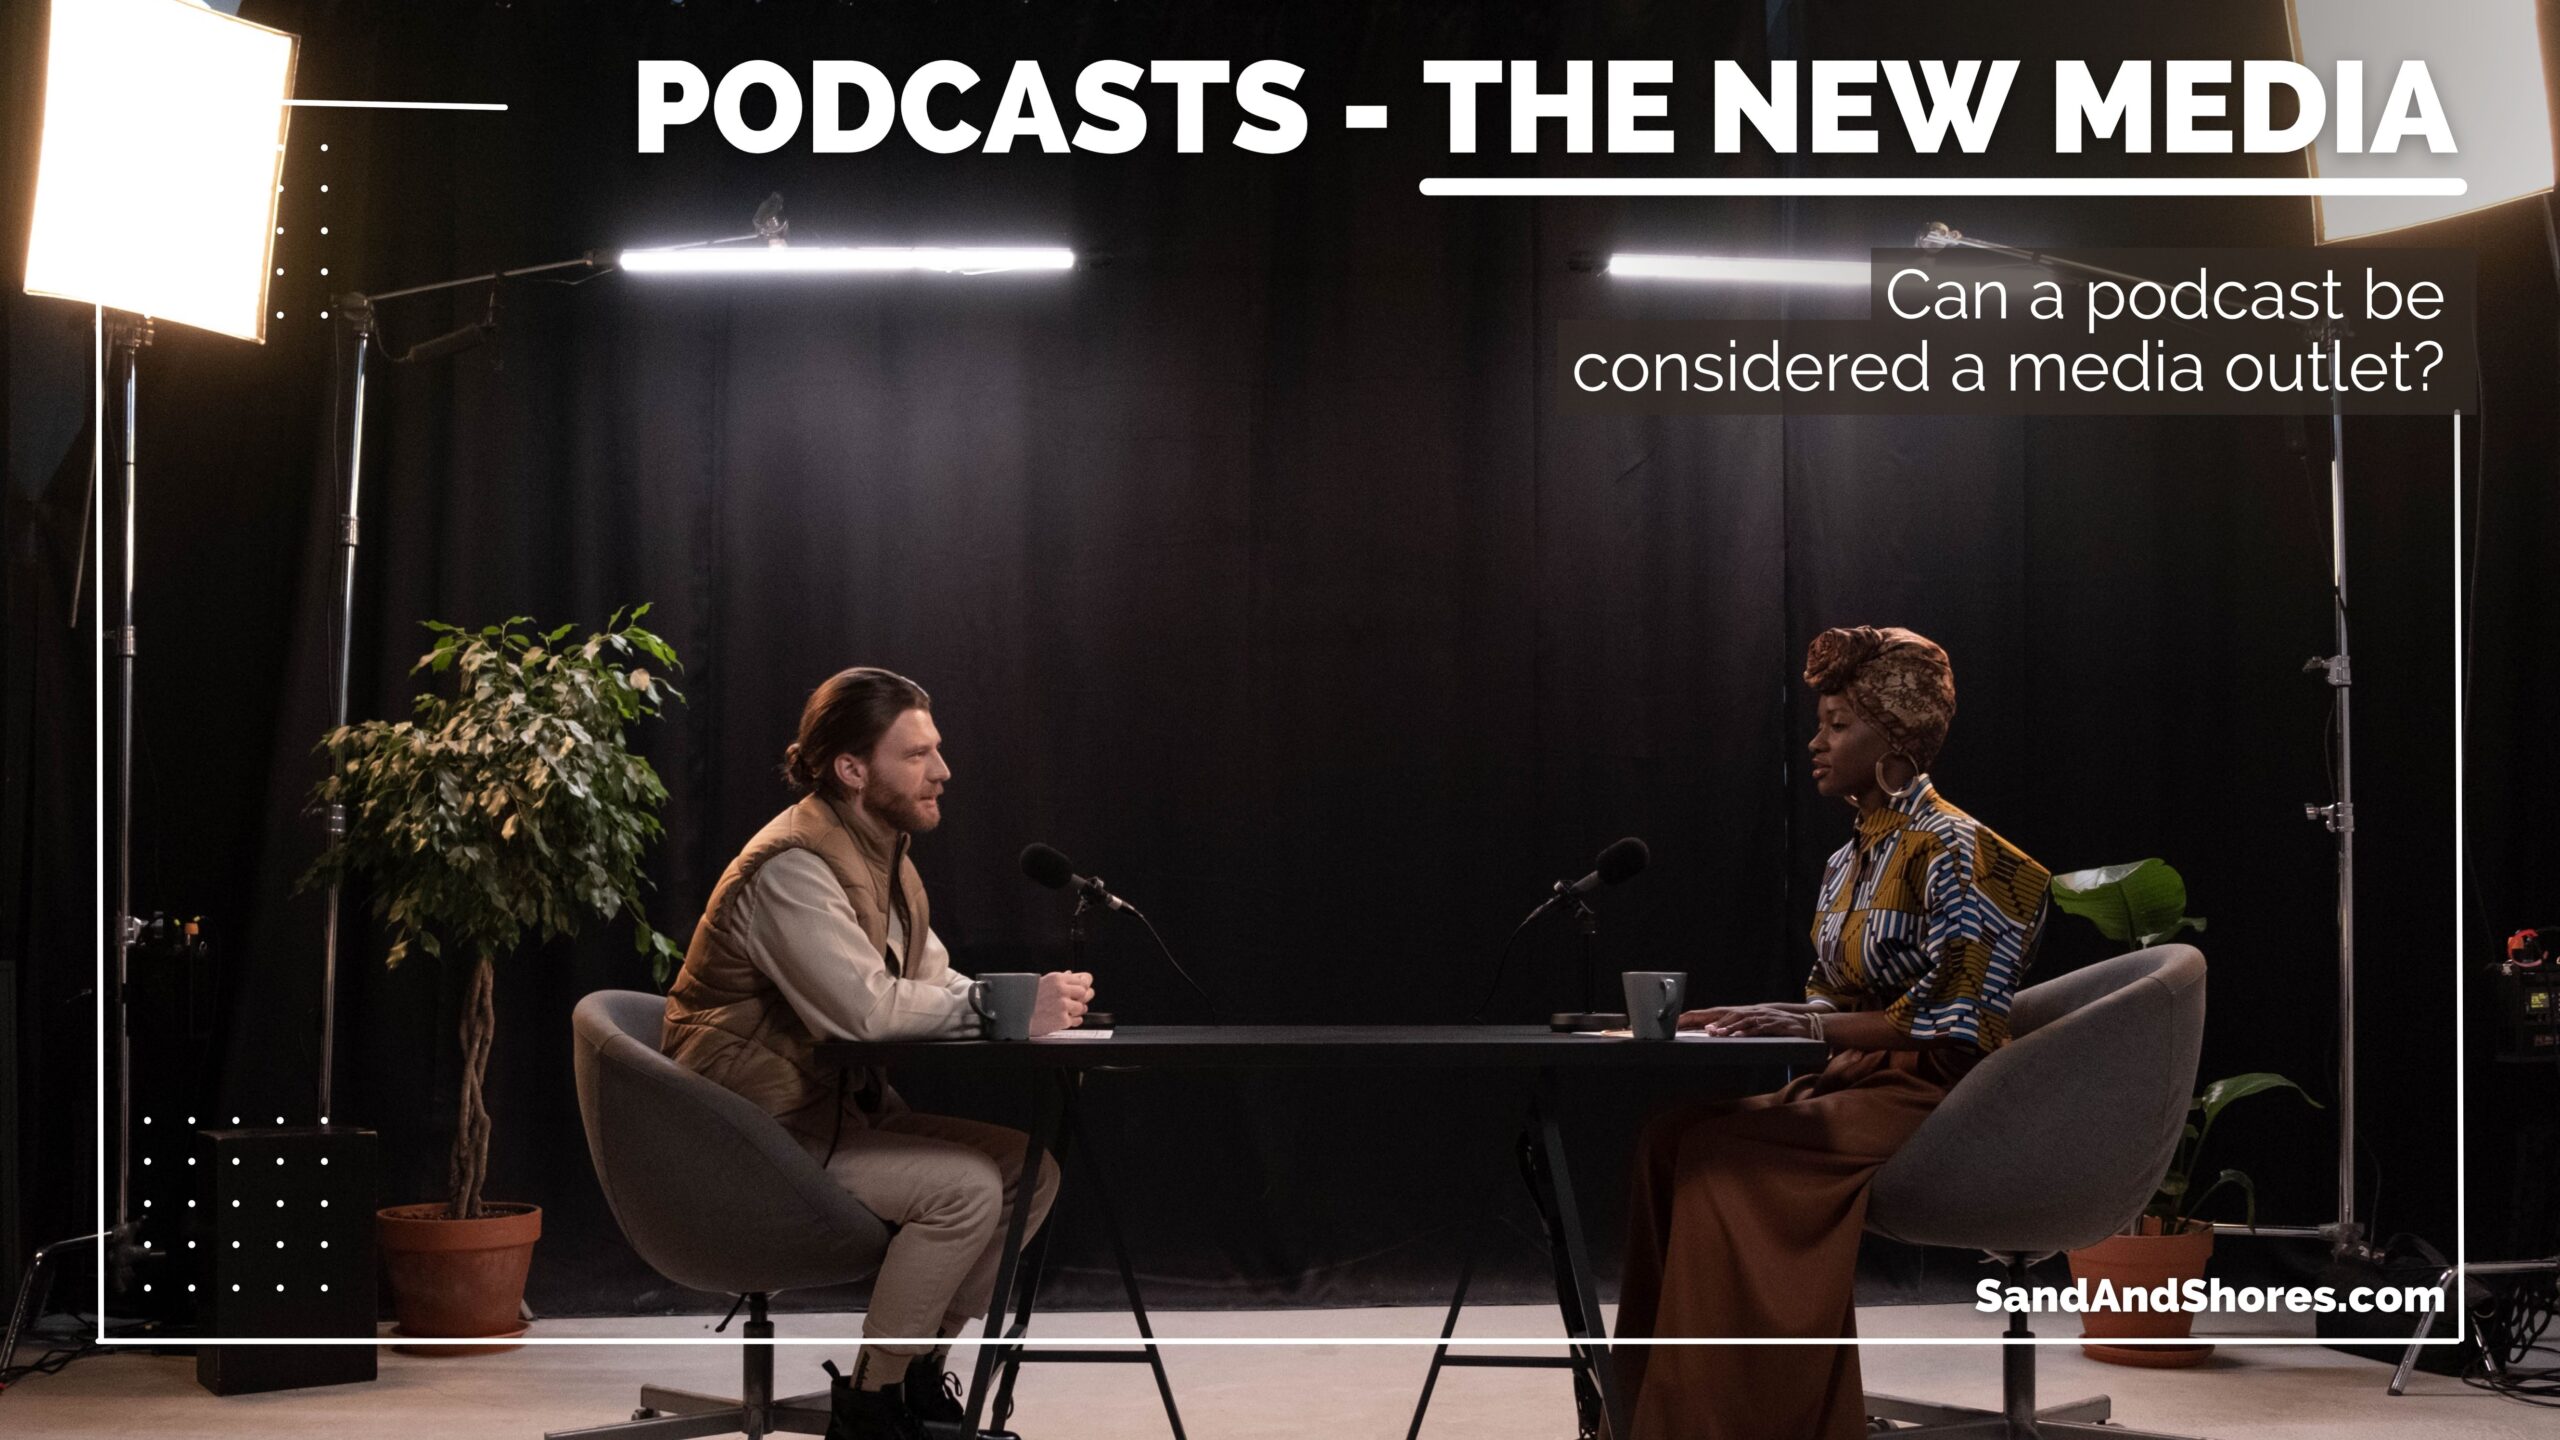 podcasting as a new media medium